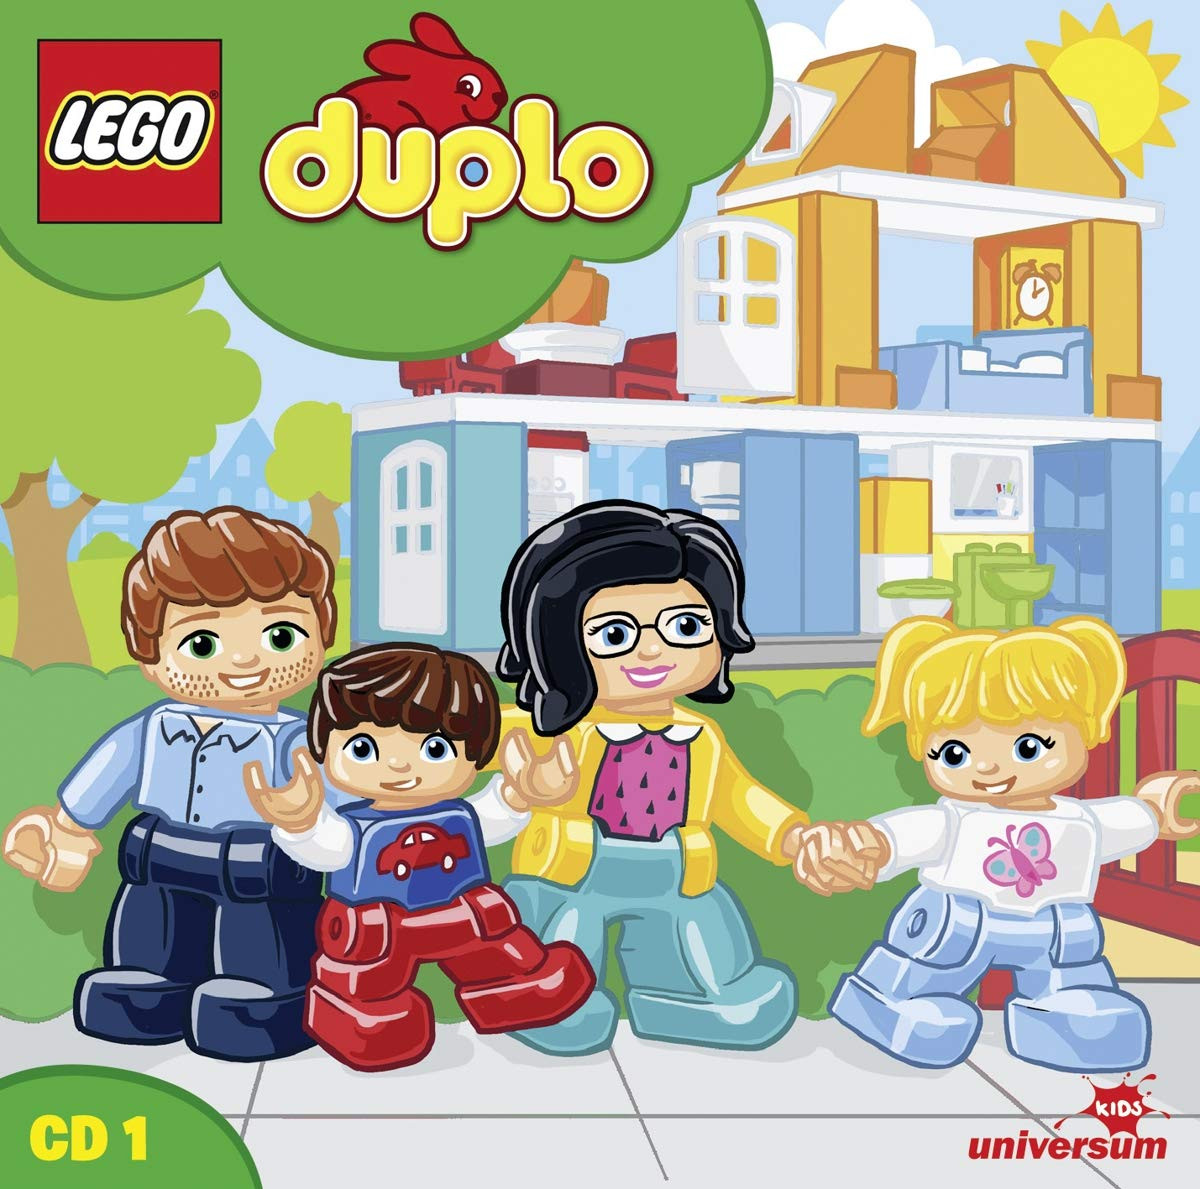 LEGO Duplo CD 1